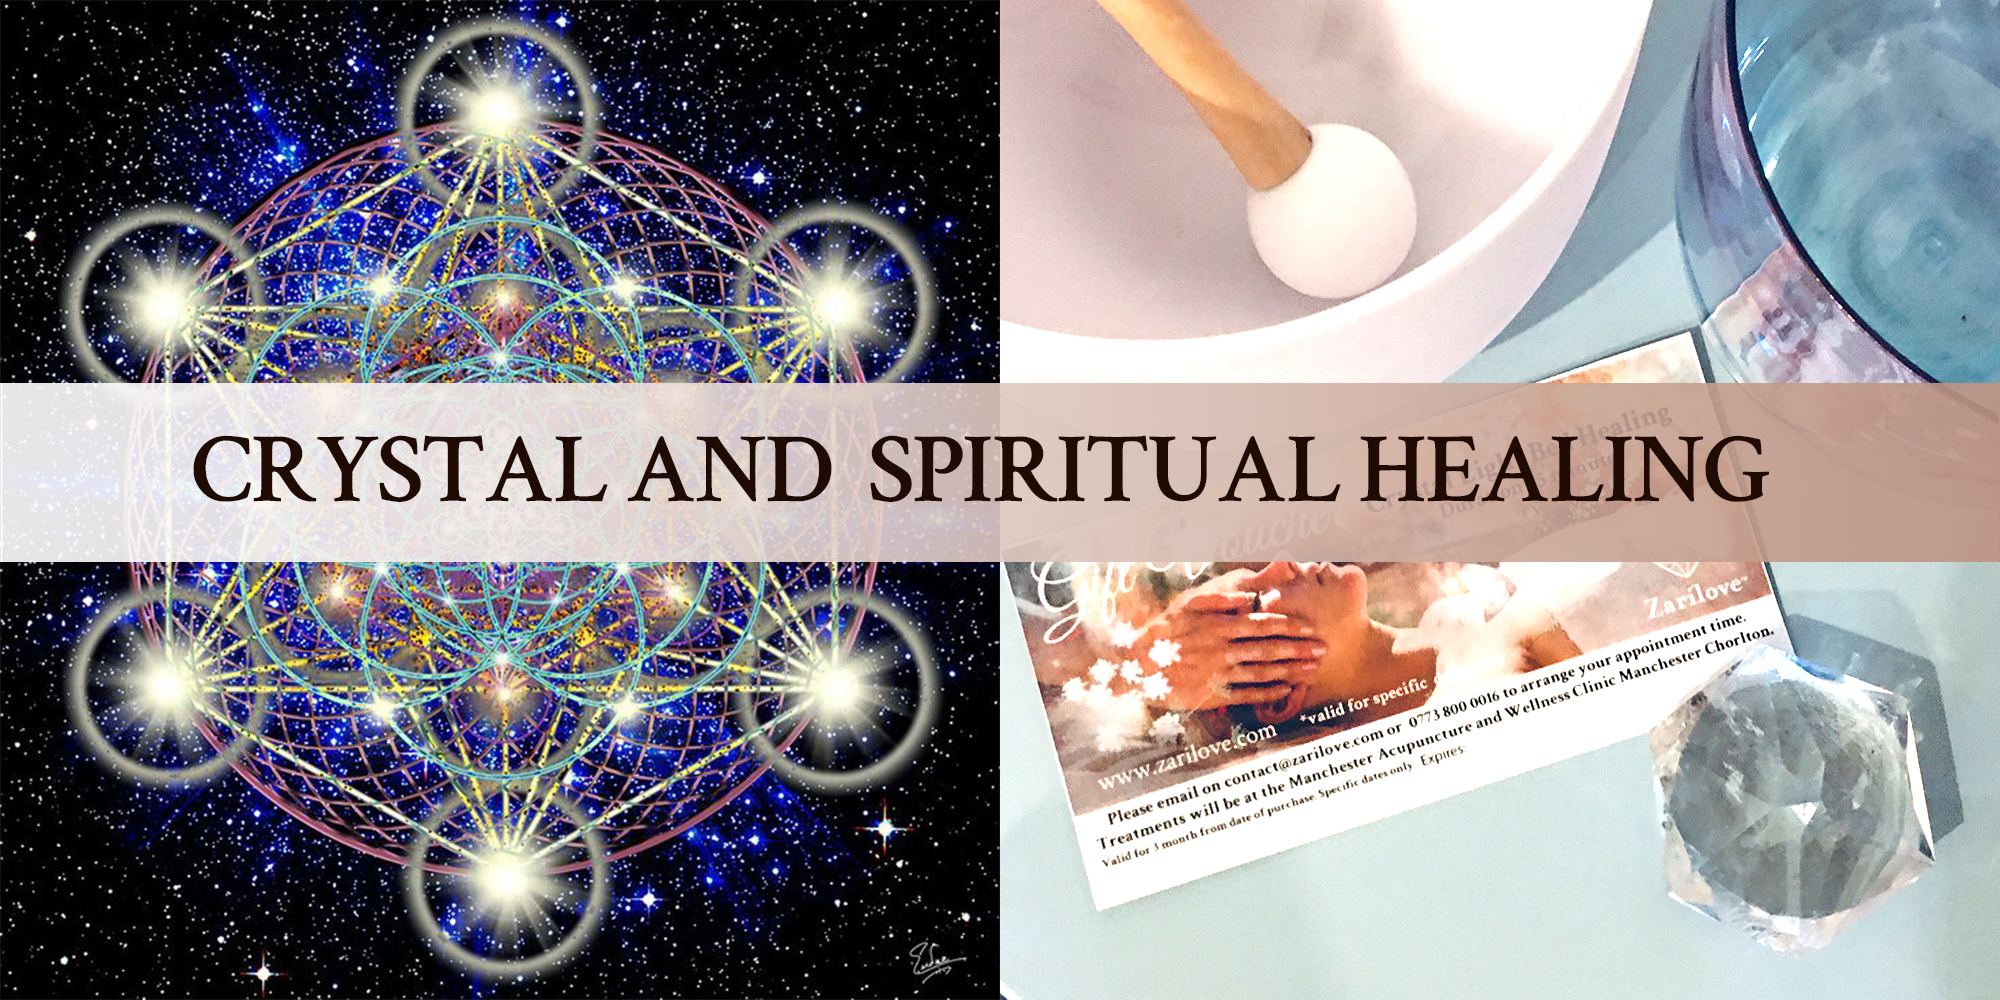 Spiritual Healing with Crystal Light Bath and Crystal Sound bowls.